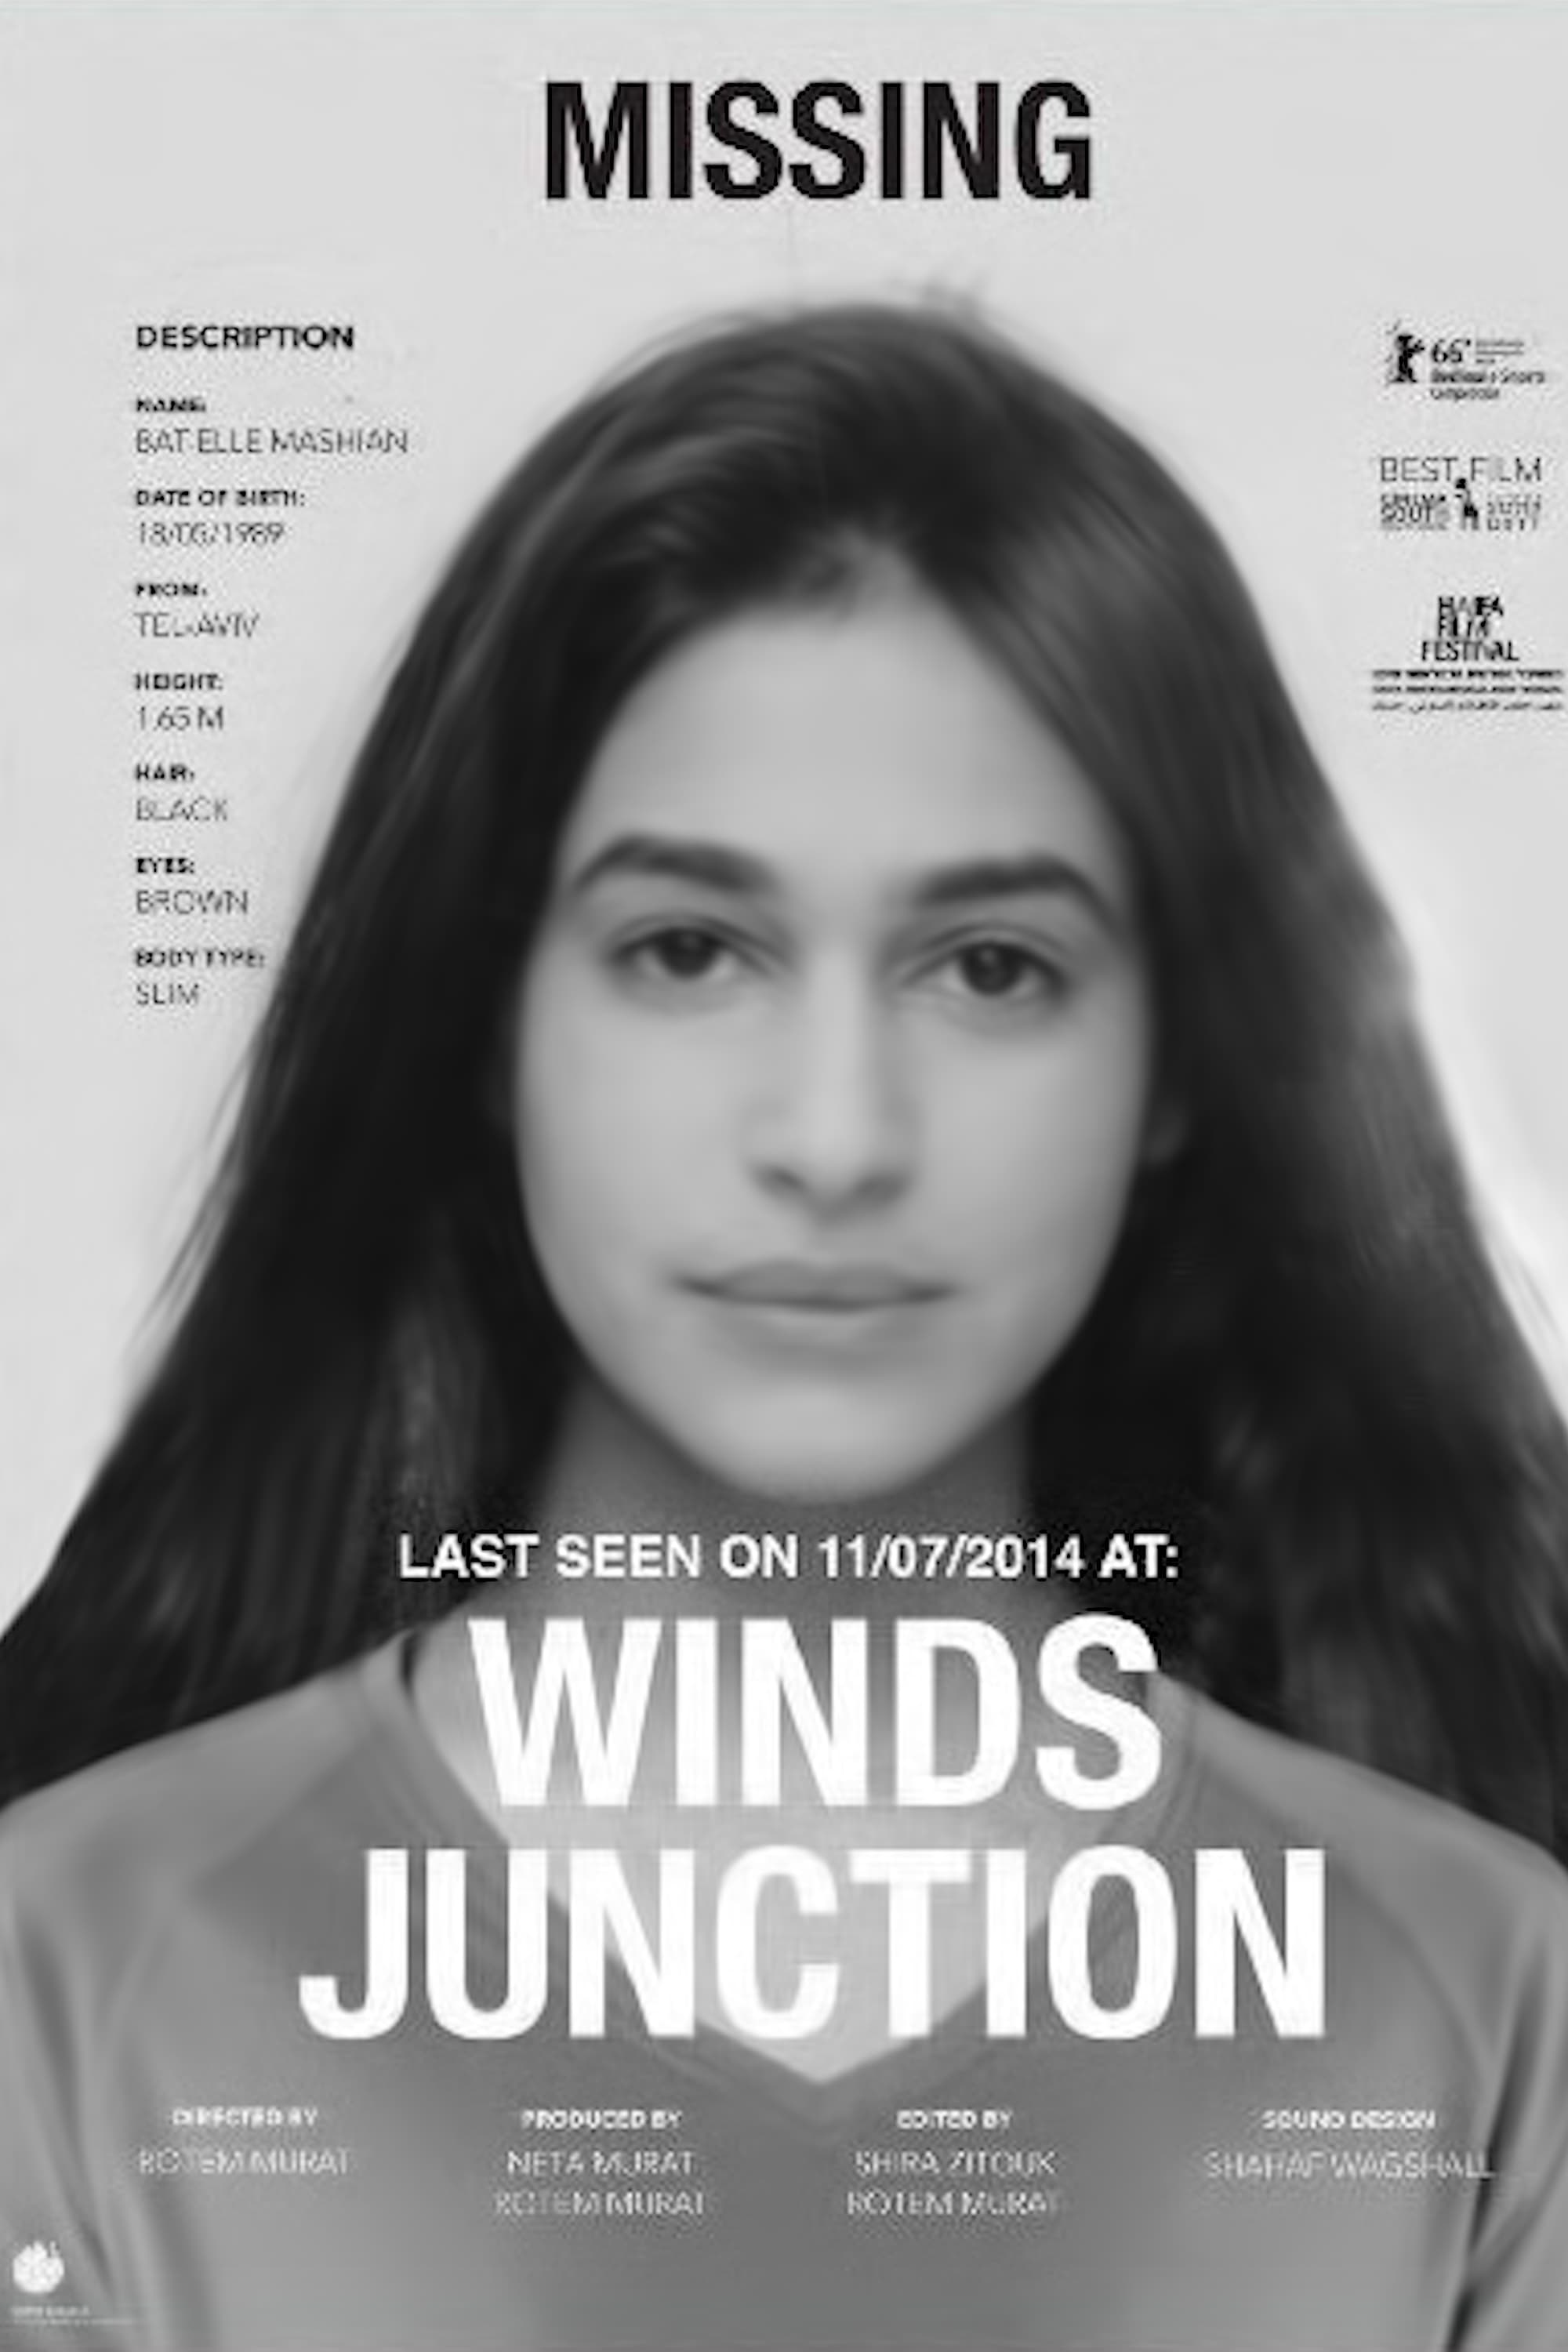 Winds Junction